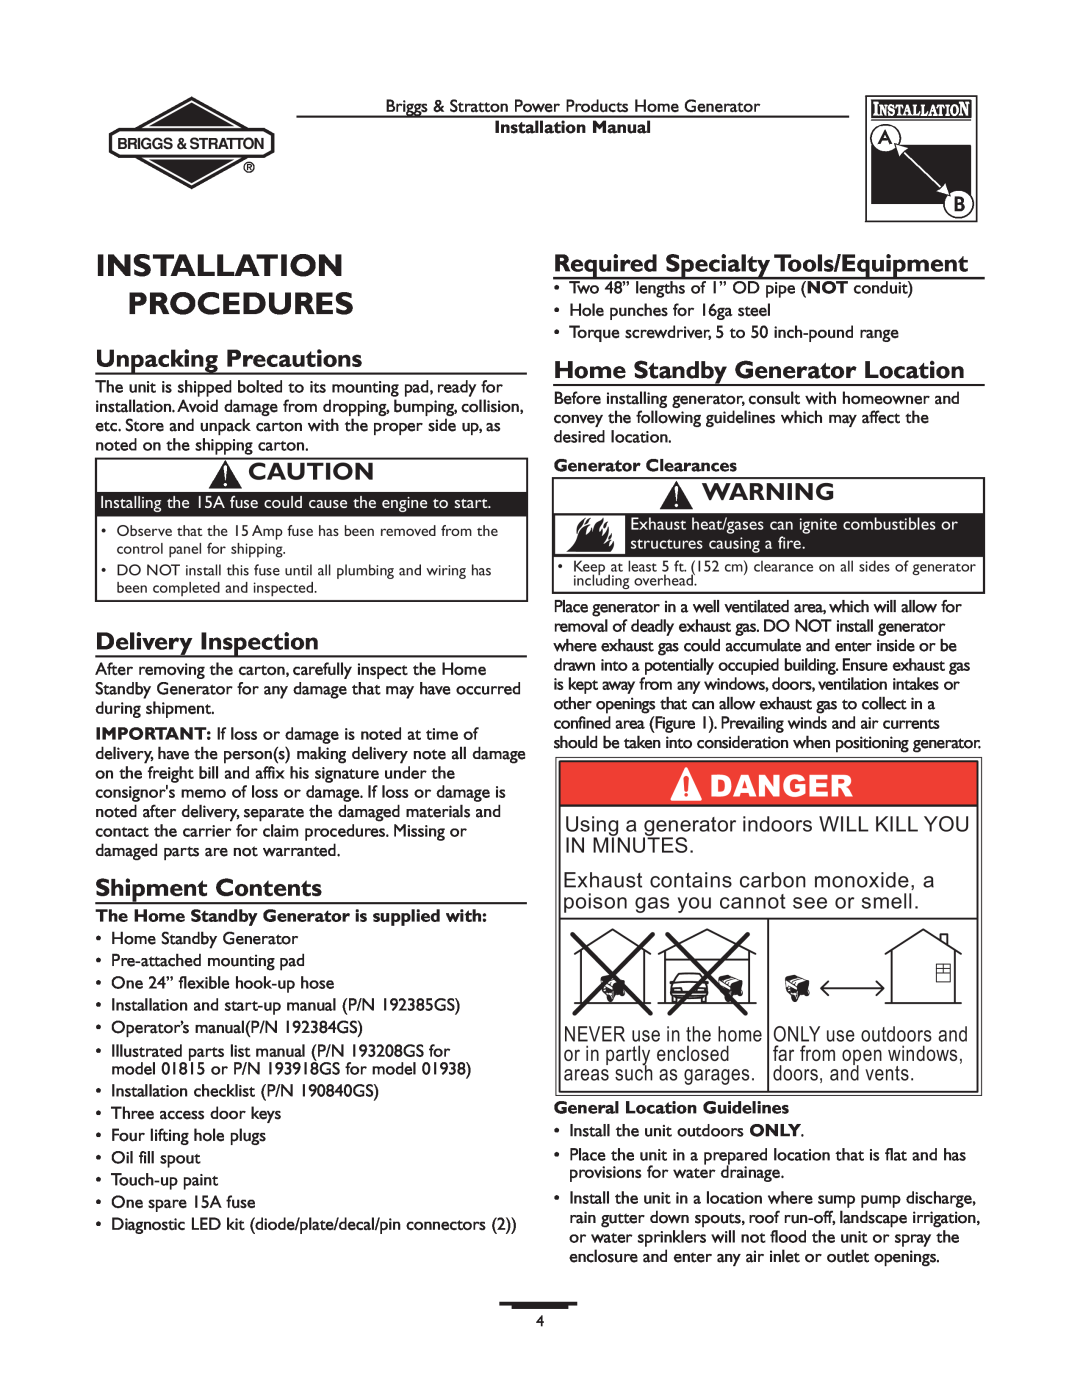 Briggs & Stratton 01938-0, 01815-0 manual Installation Procedures, Required Specialty Tools/Equipment, Unpacking Precautions 